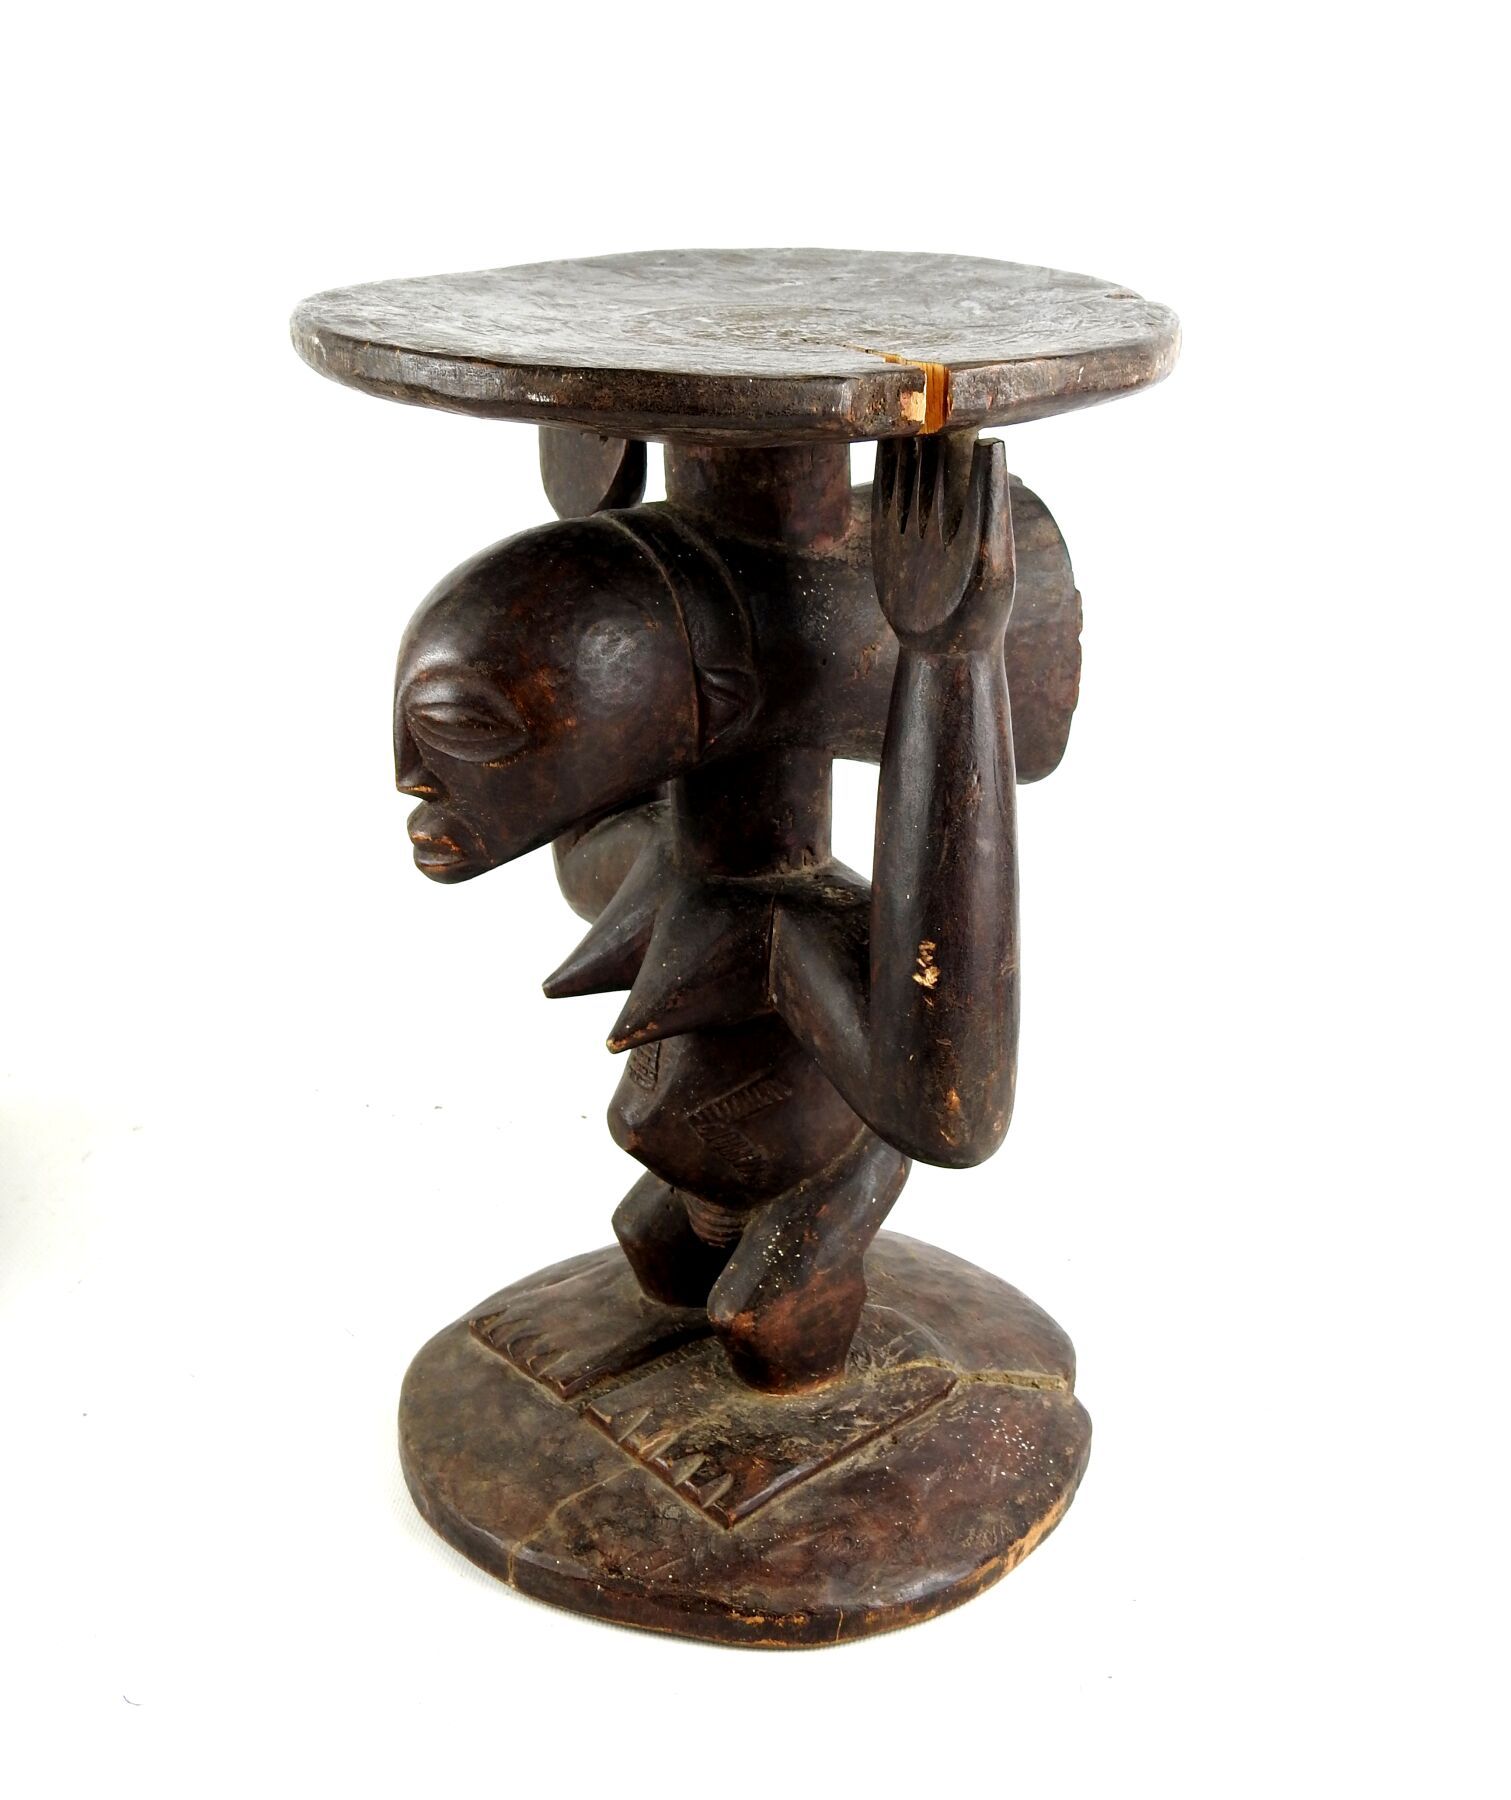 Null LUBA，刚果民主共和国。
硬木，棕色铜锈。
座椅上有代表站立人物的卡利亚特，站立的手臂象征性地支撑着座椅。
高度：36厘米。
小事故和缺失的零件。